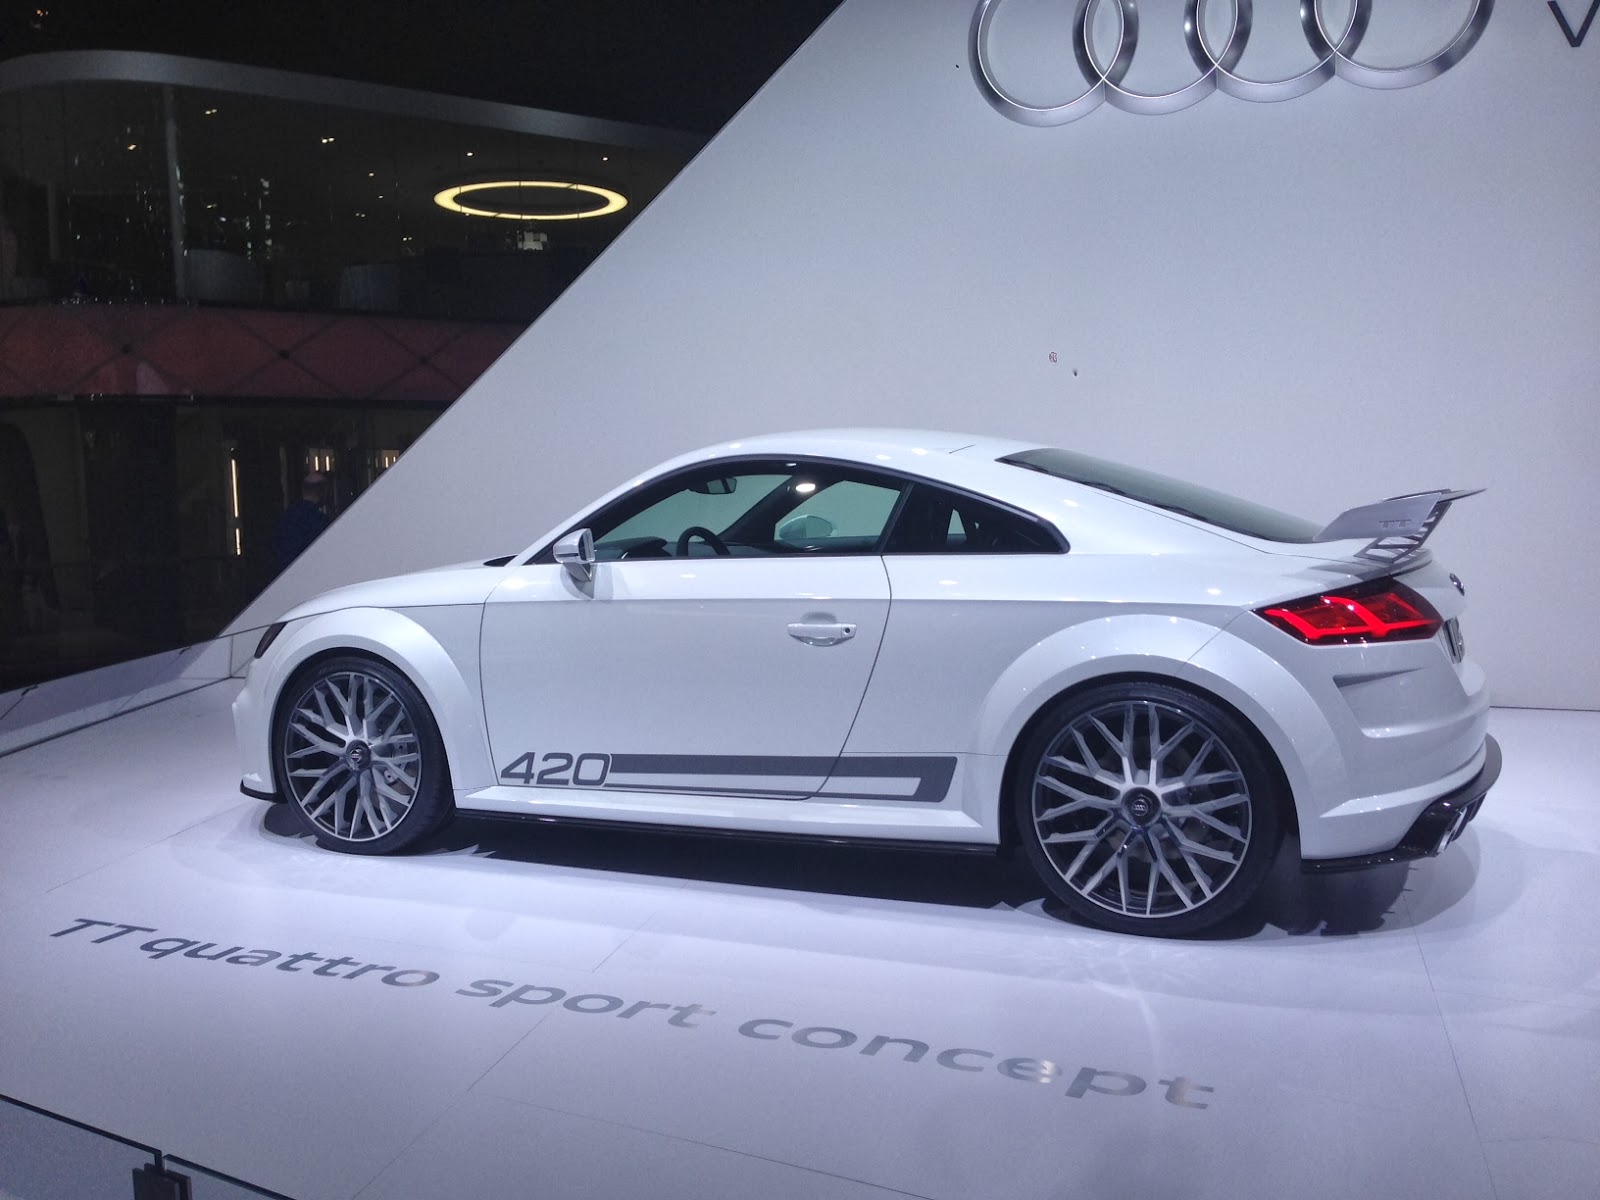 Audi TT 420 at Geneva Motor Show